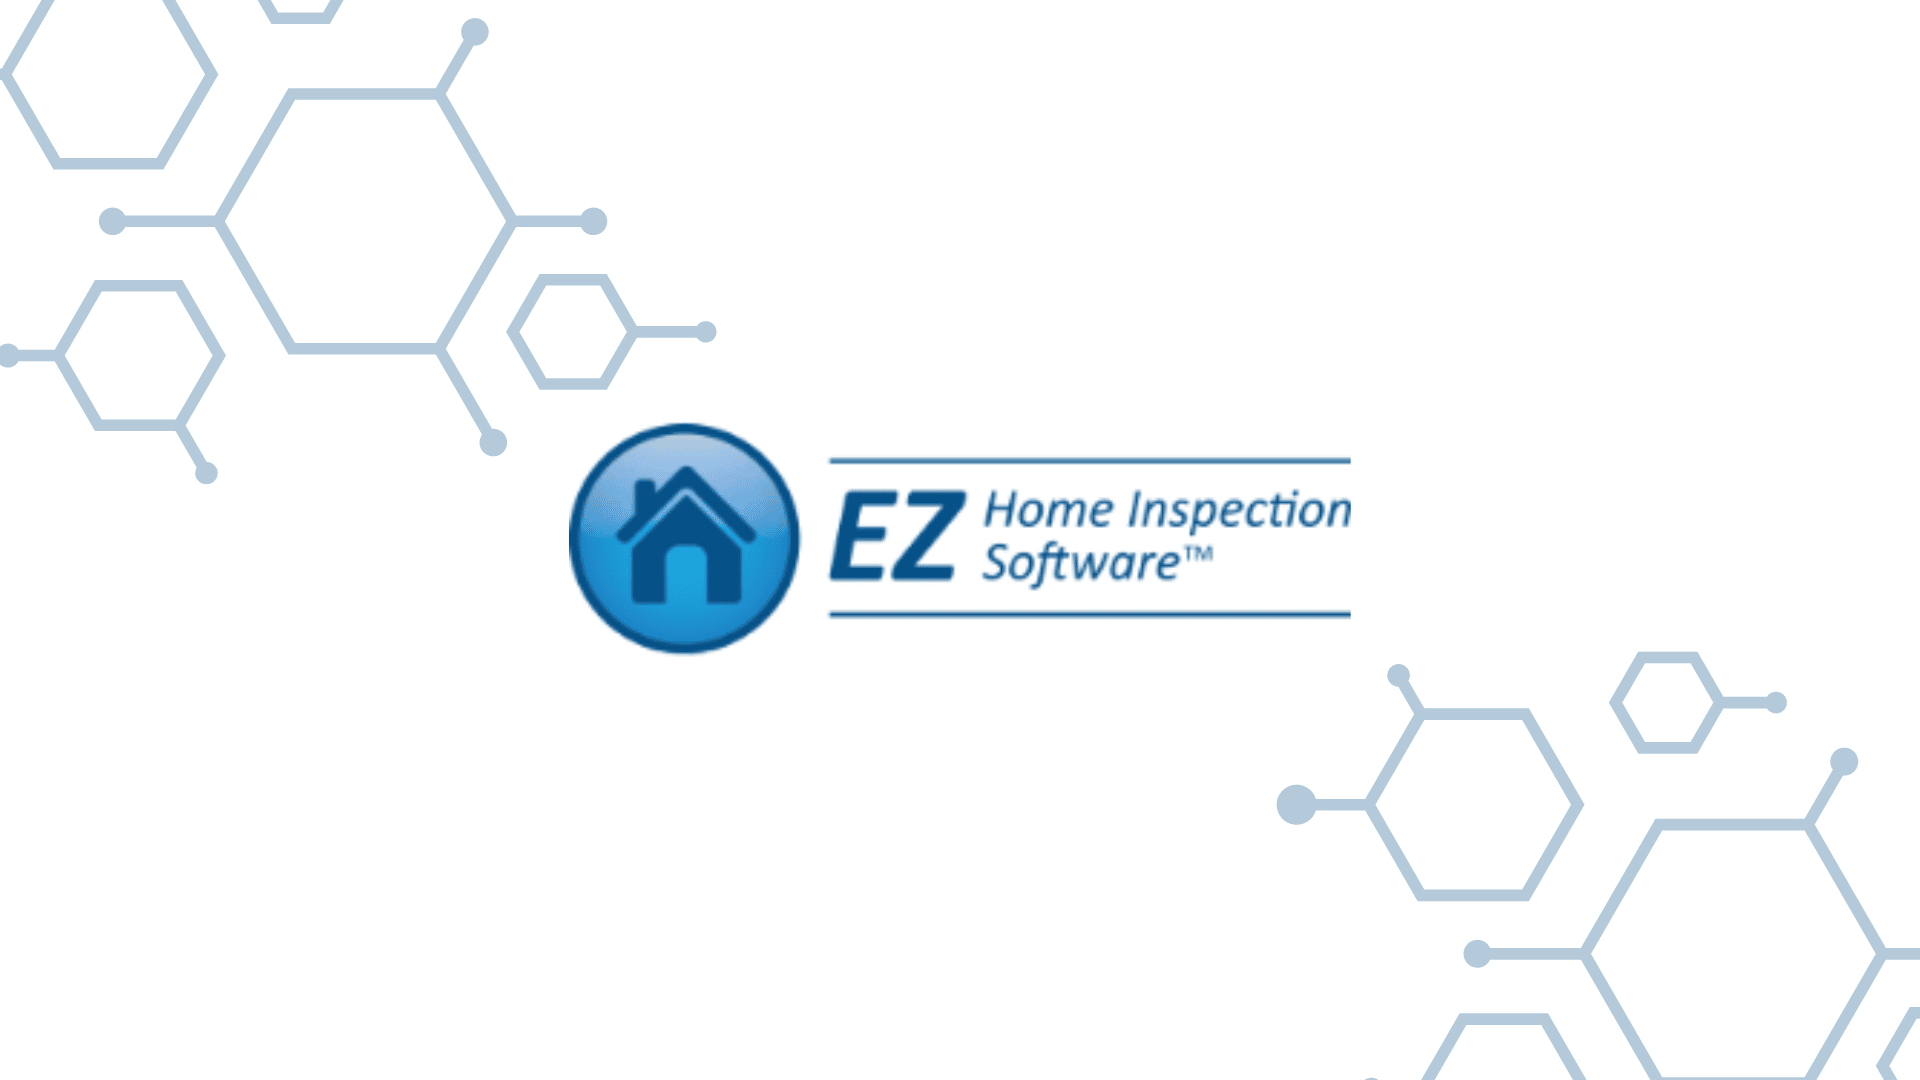 EZ Home Inspection Software Logo